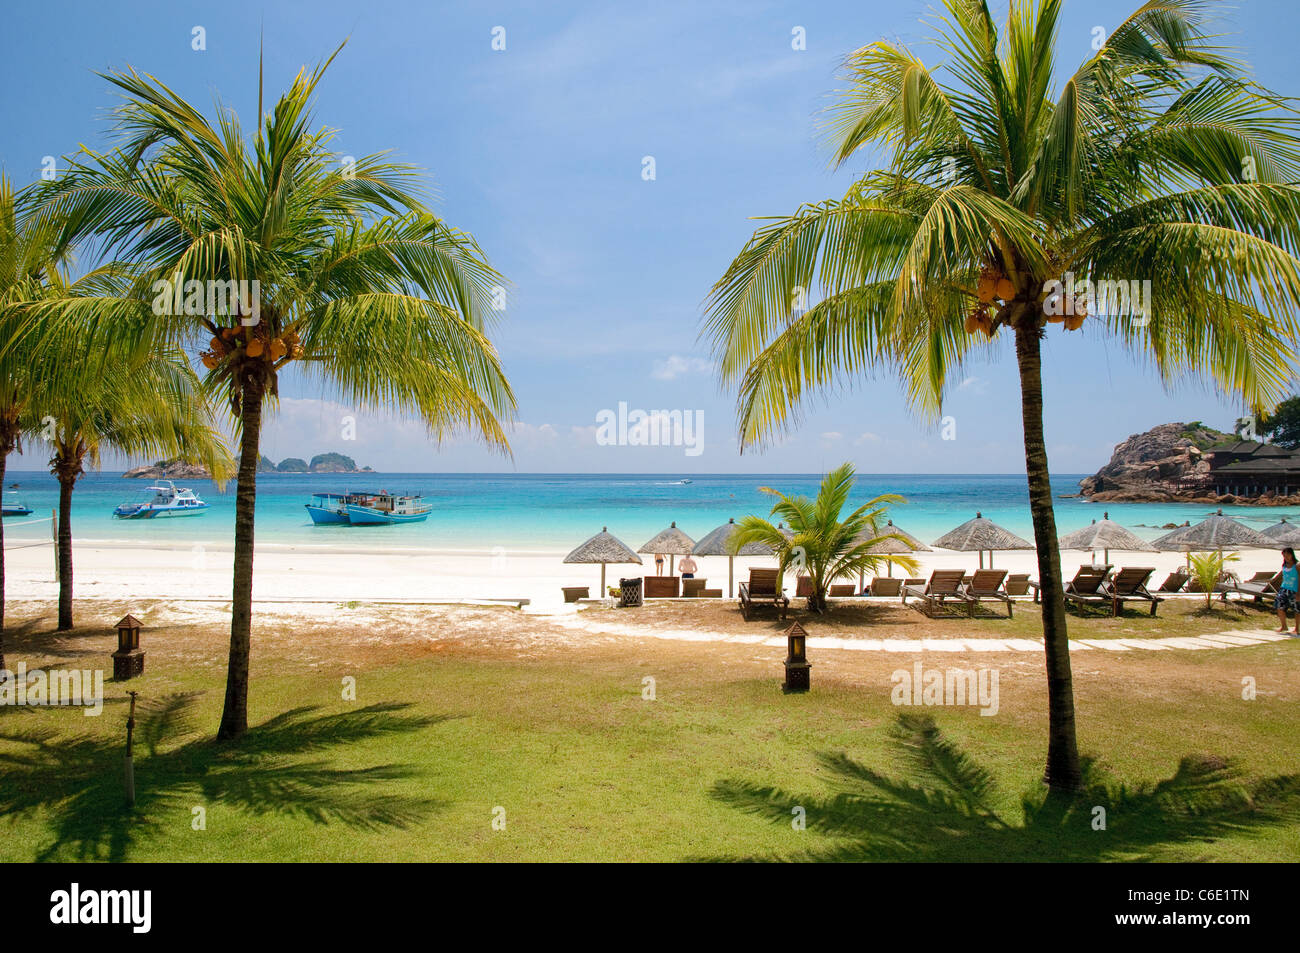 Playa con palmeras, Pulau Redang island, Malasia, Sudeste Asiático, Asia Foto de stock